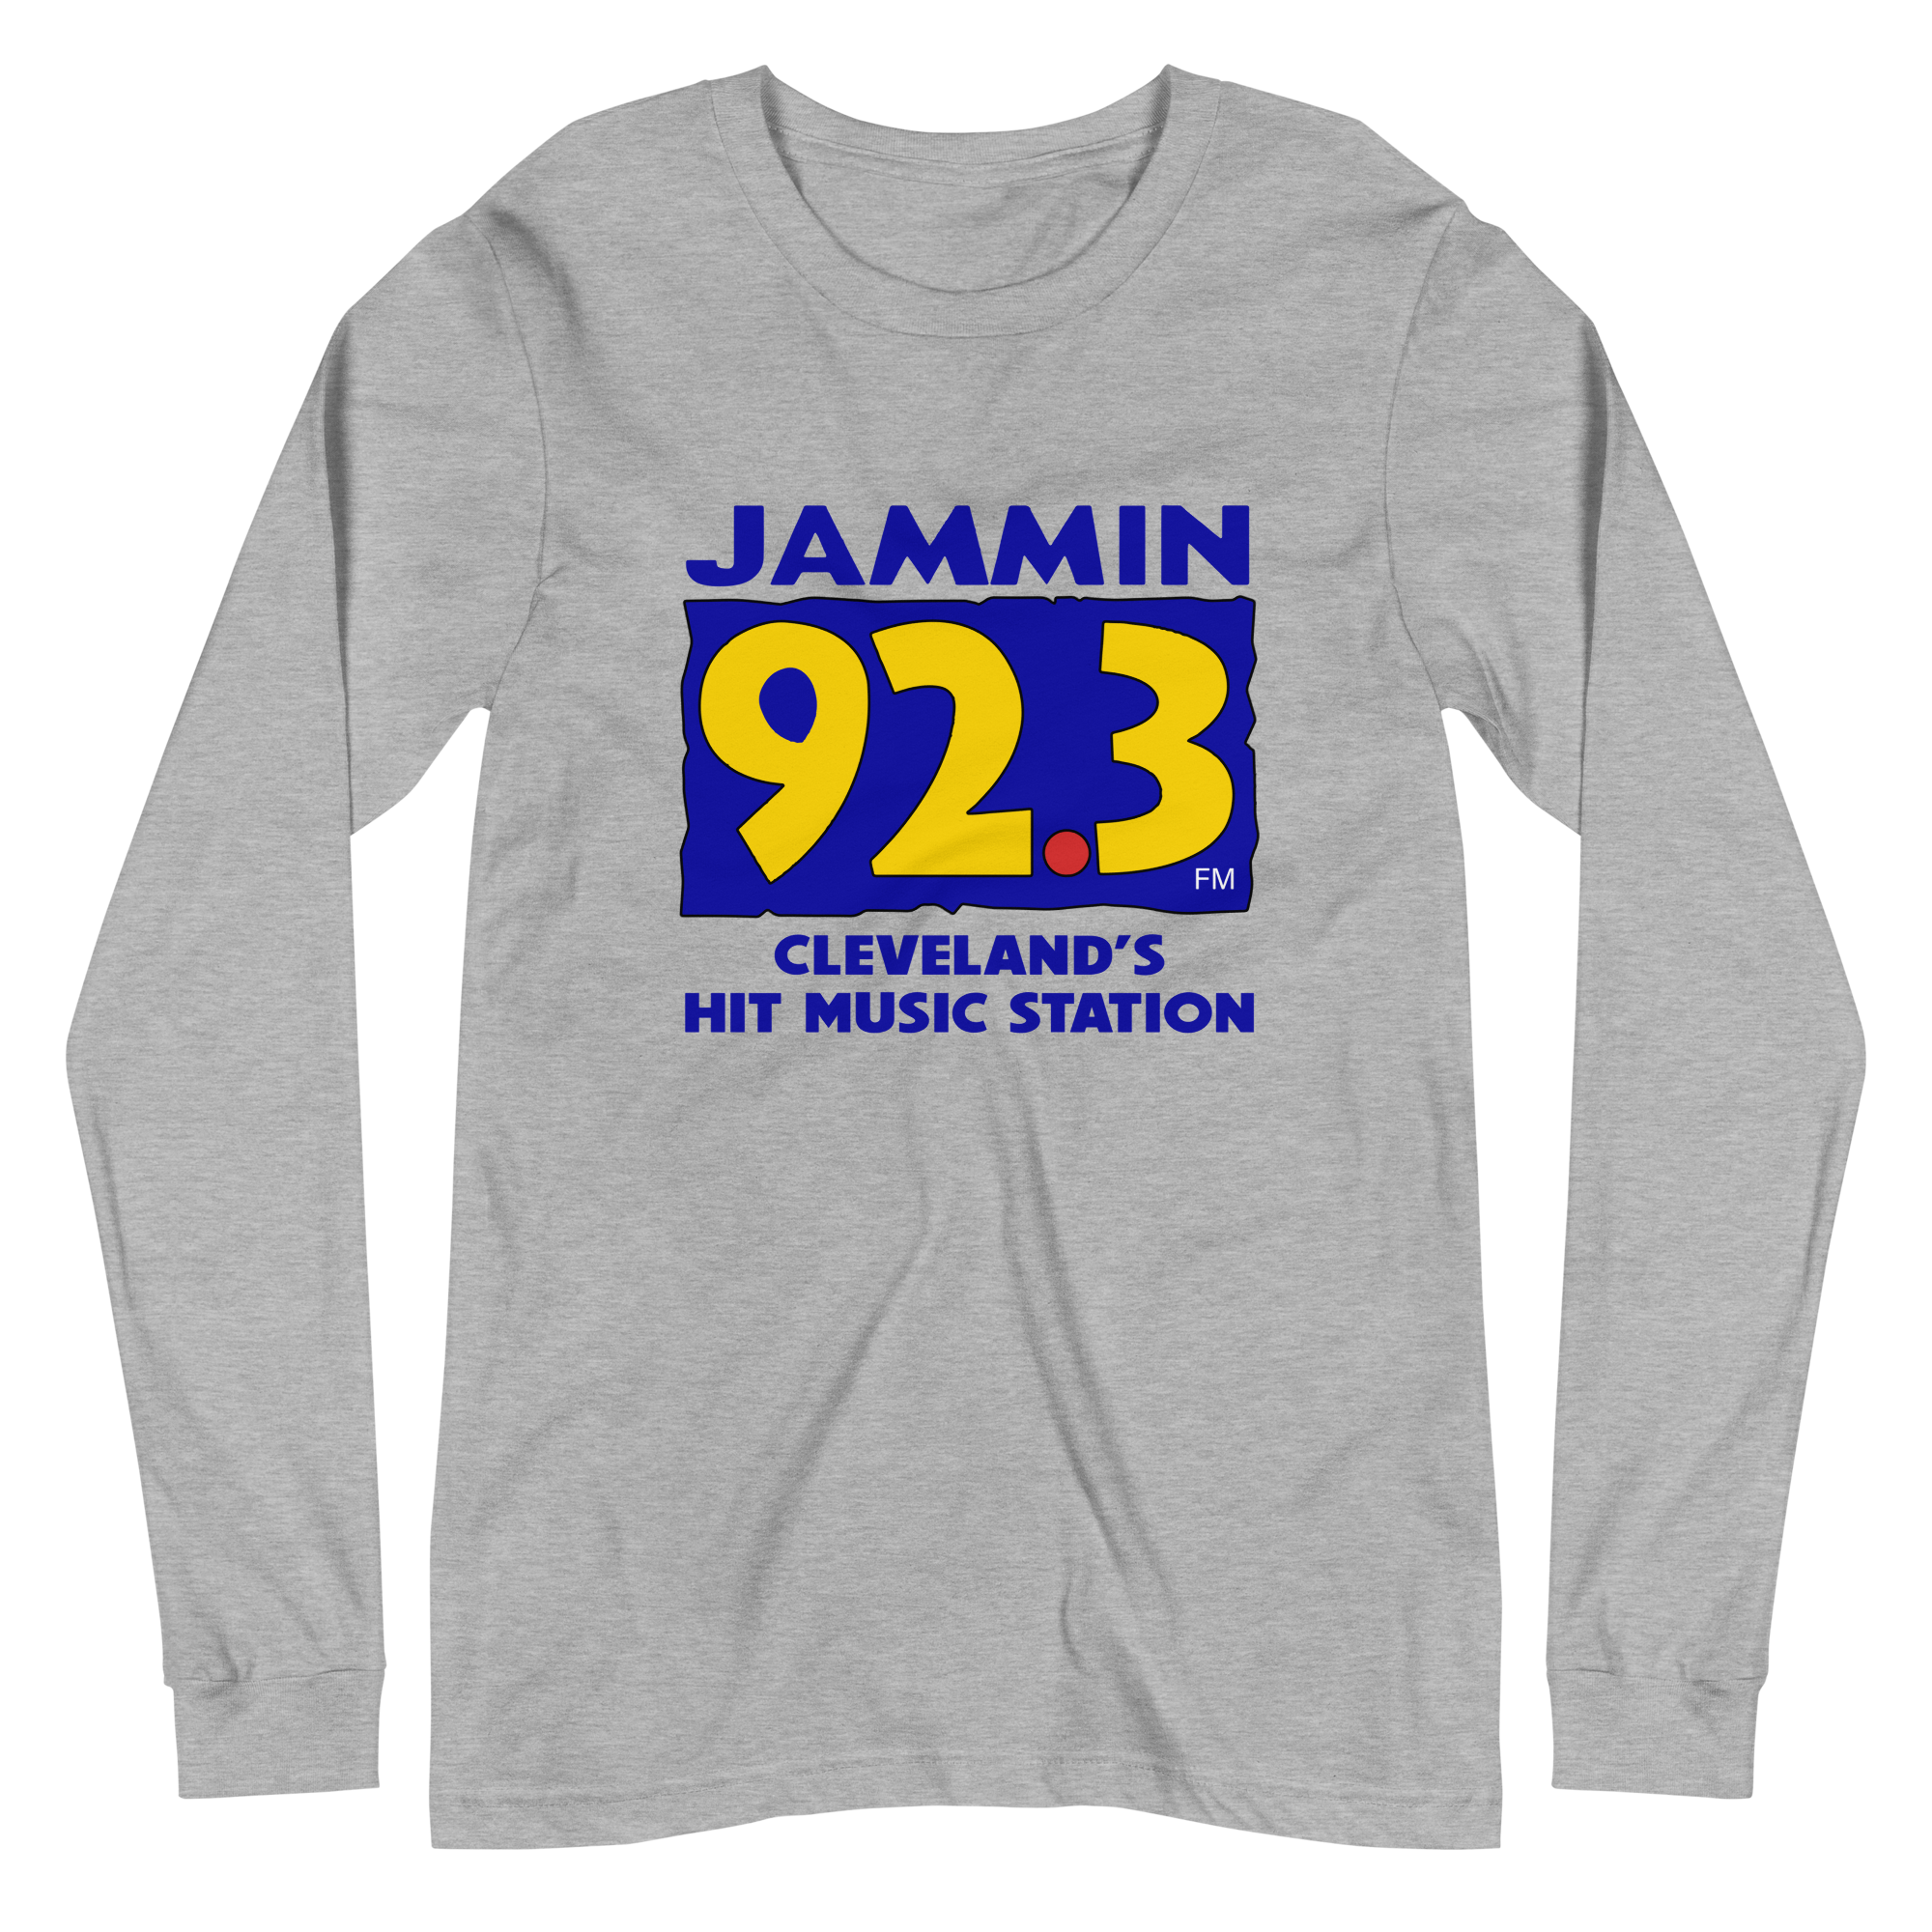 Jammin 92.3 Long-Sleeve T-Shirt